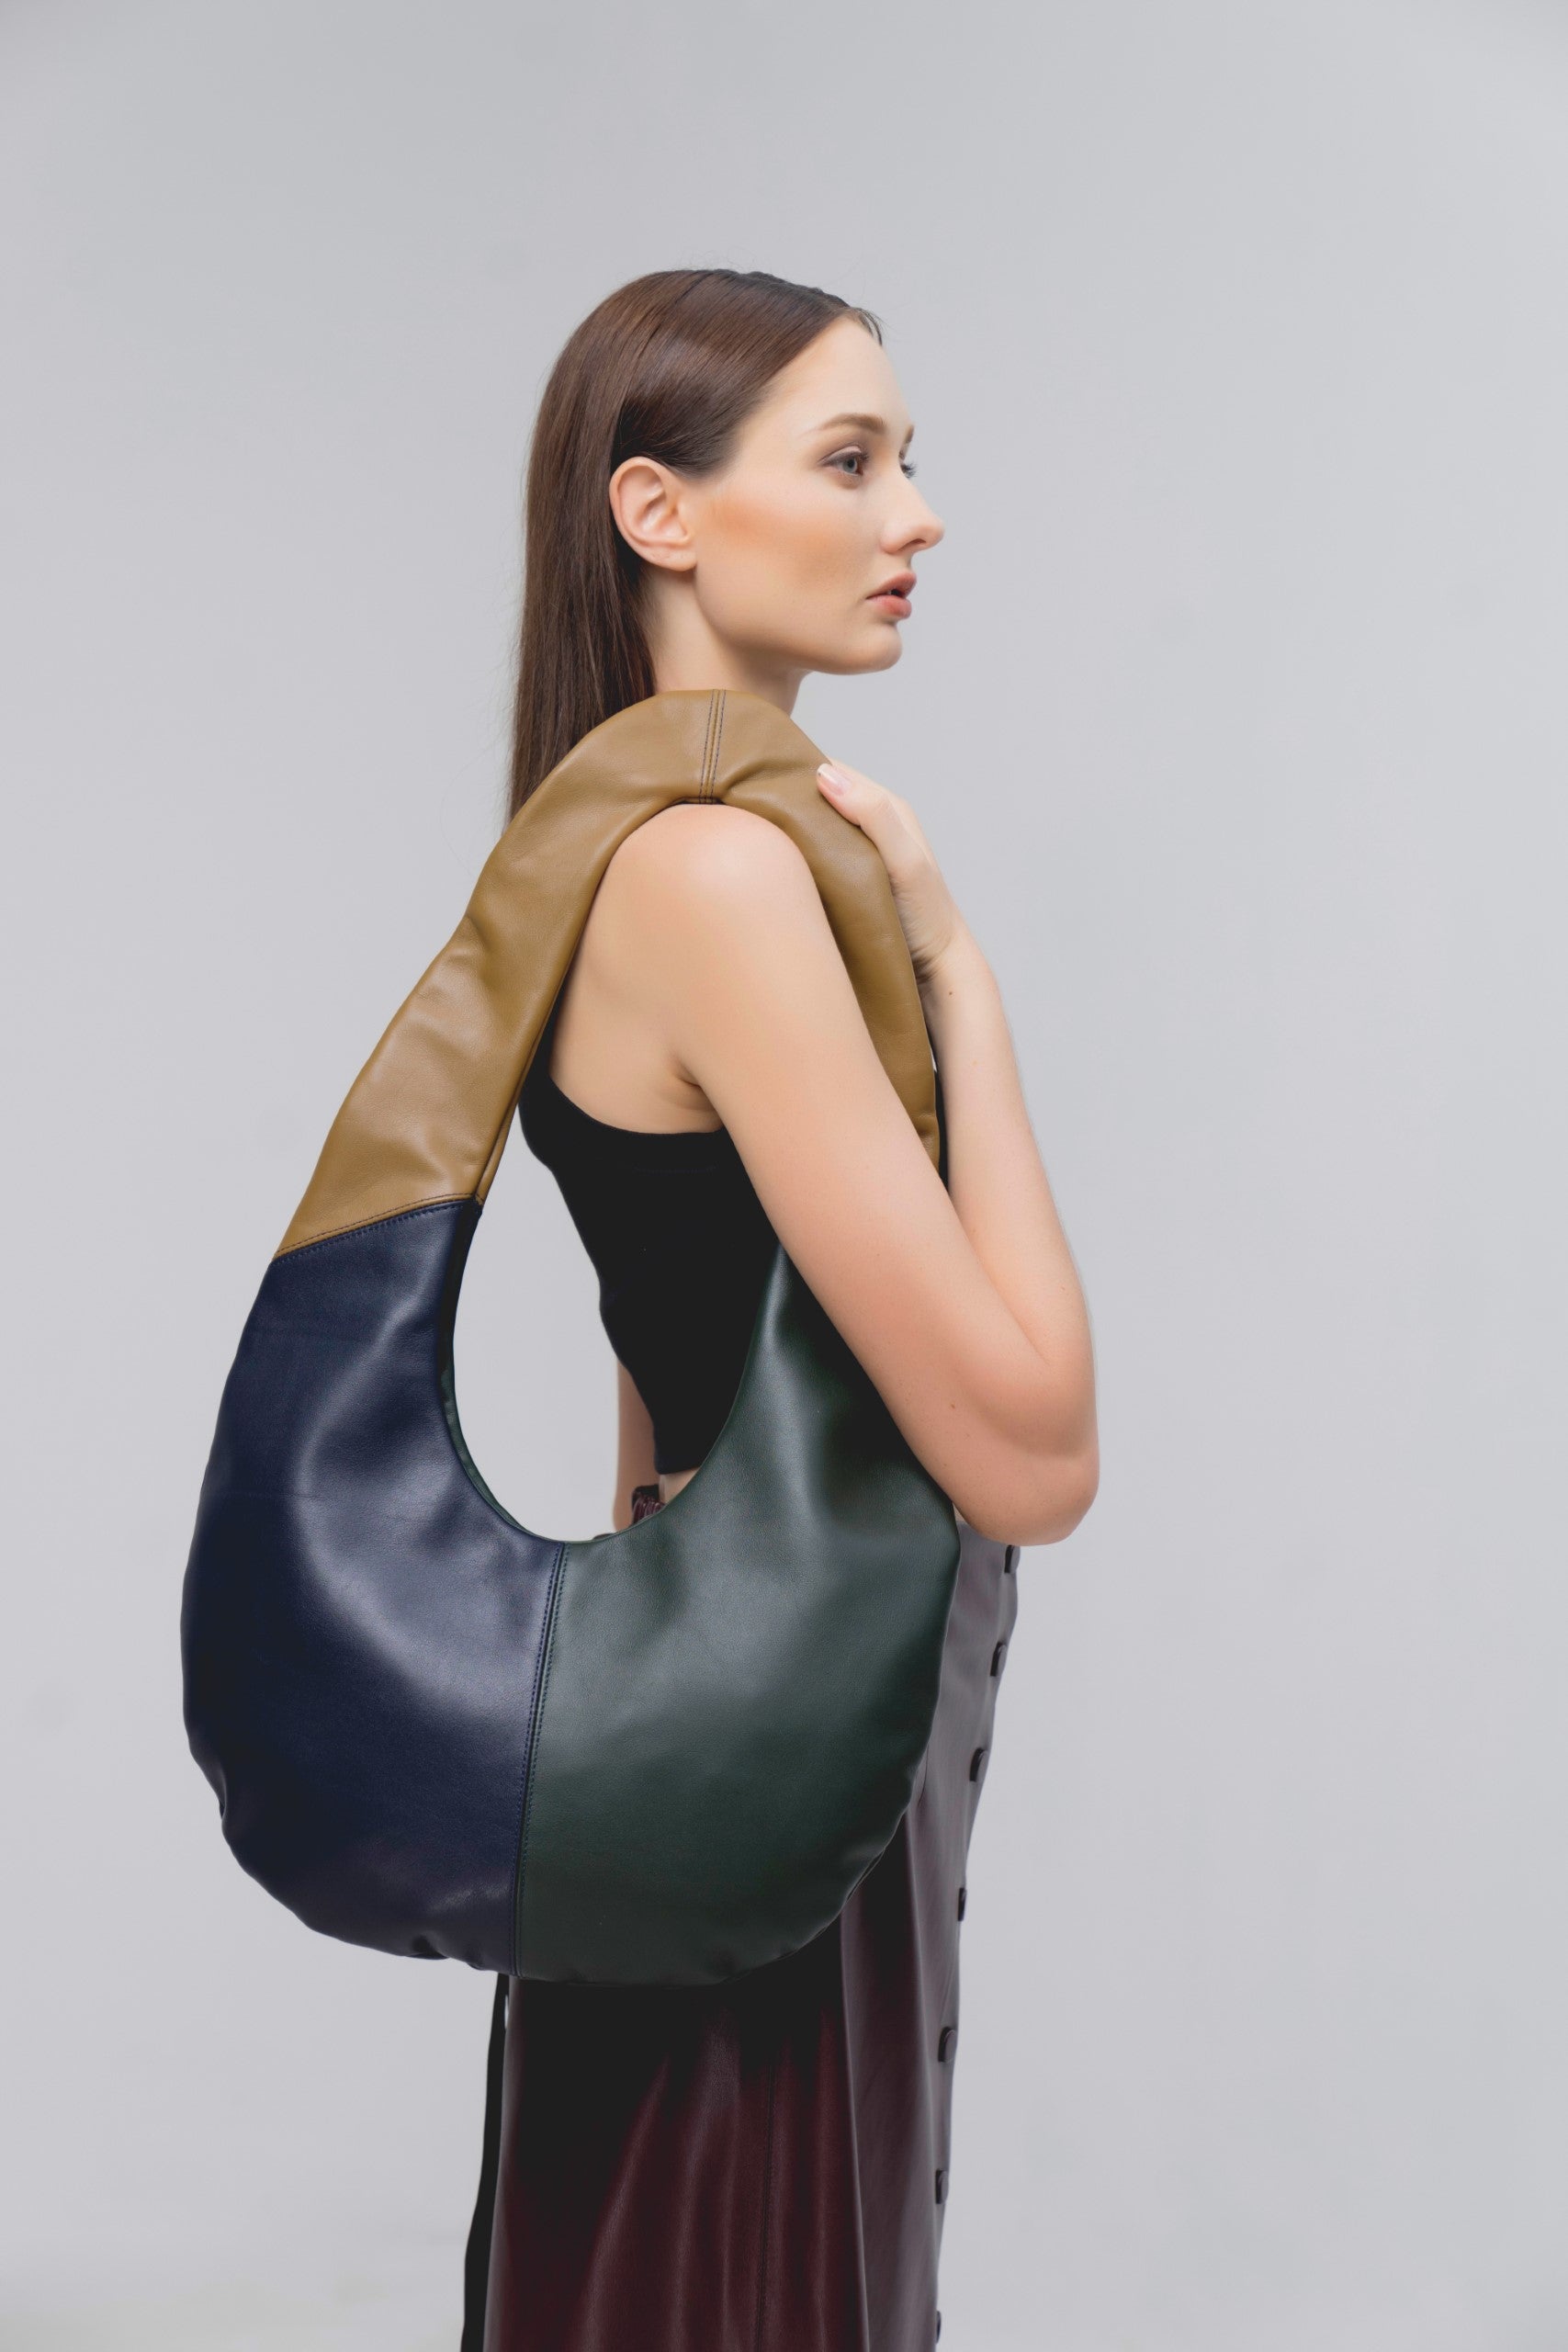 RAINDROP Trio handbag (real leather)